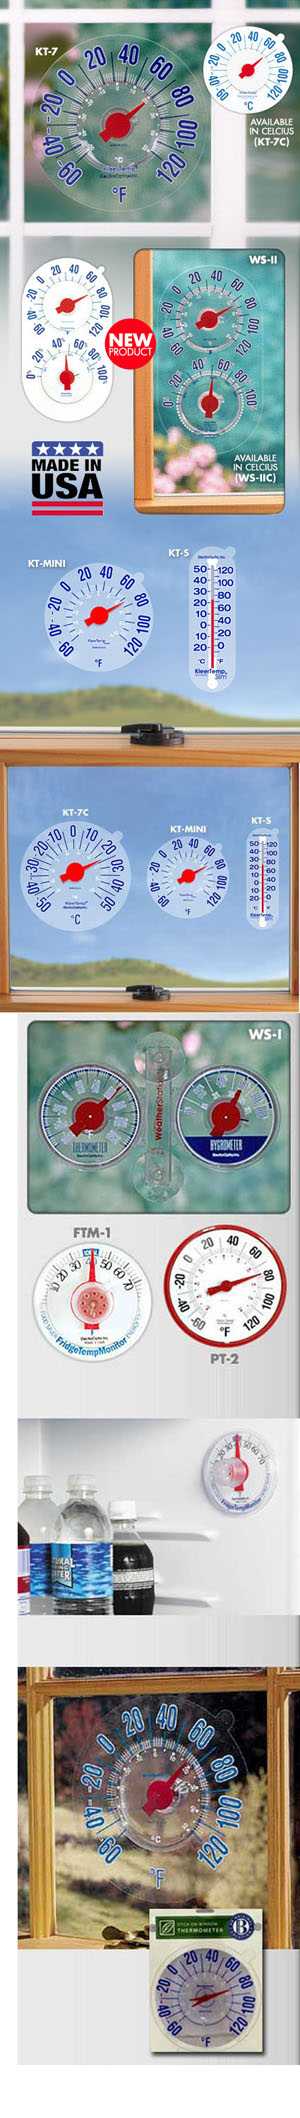 2 Kleertemp Outdoor Windowpane Thermometer Fahrenheit Made in USA Model KT-7